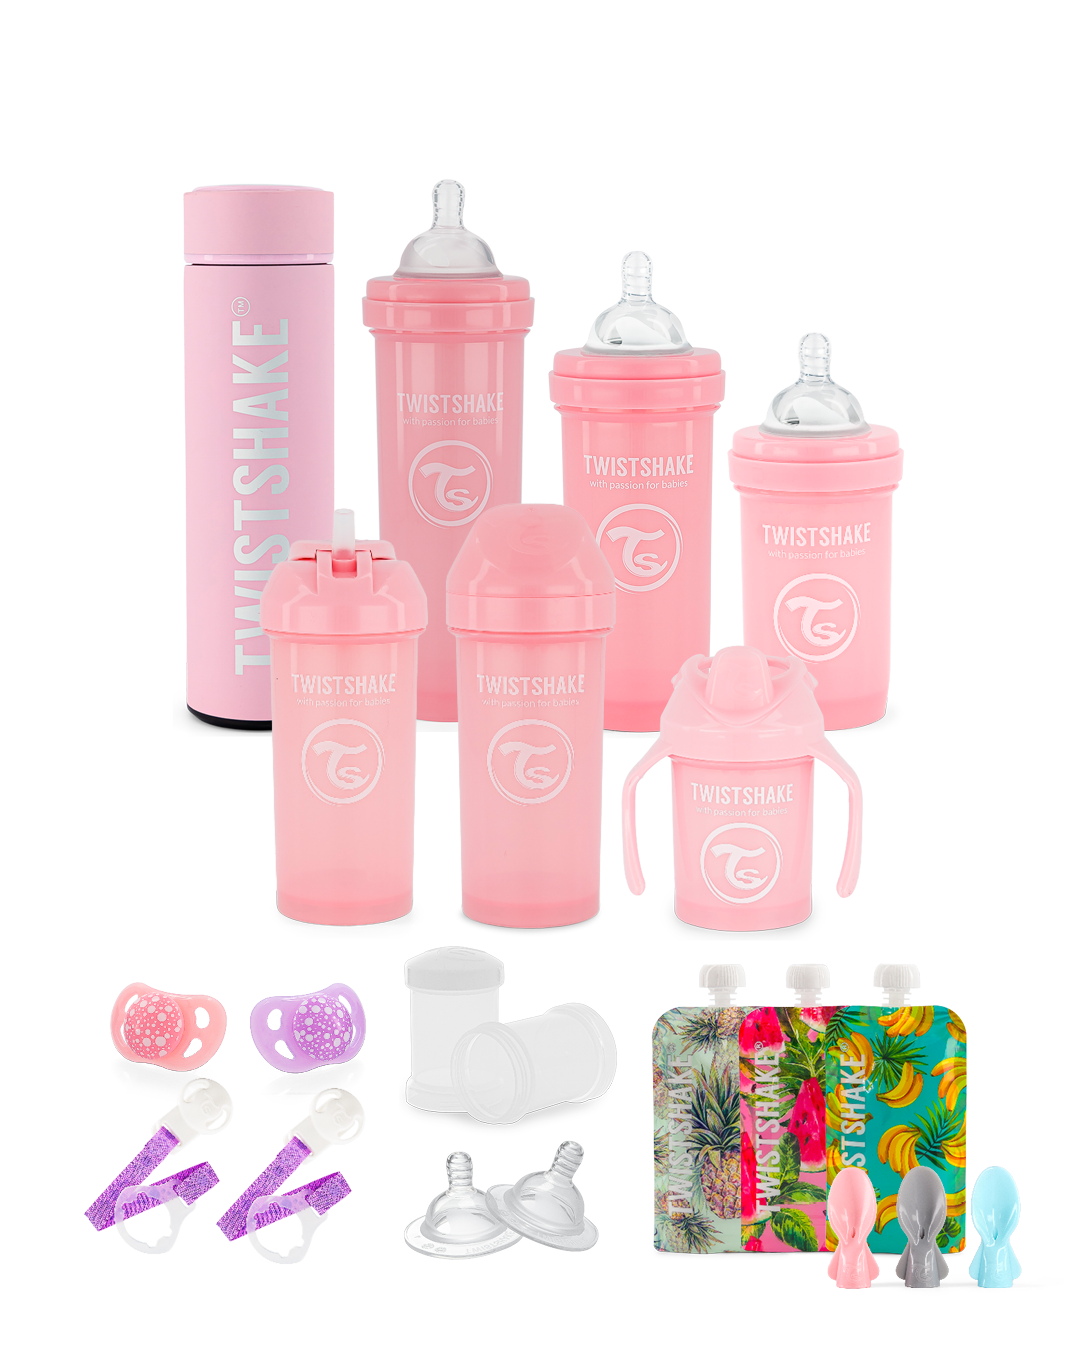 https://products.twistshake.com/images/1563_bf07d6815c-baby-bottle-sippy-cup-set_pink_230920-original.jpg